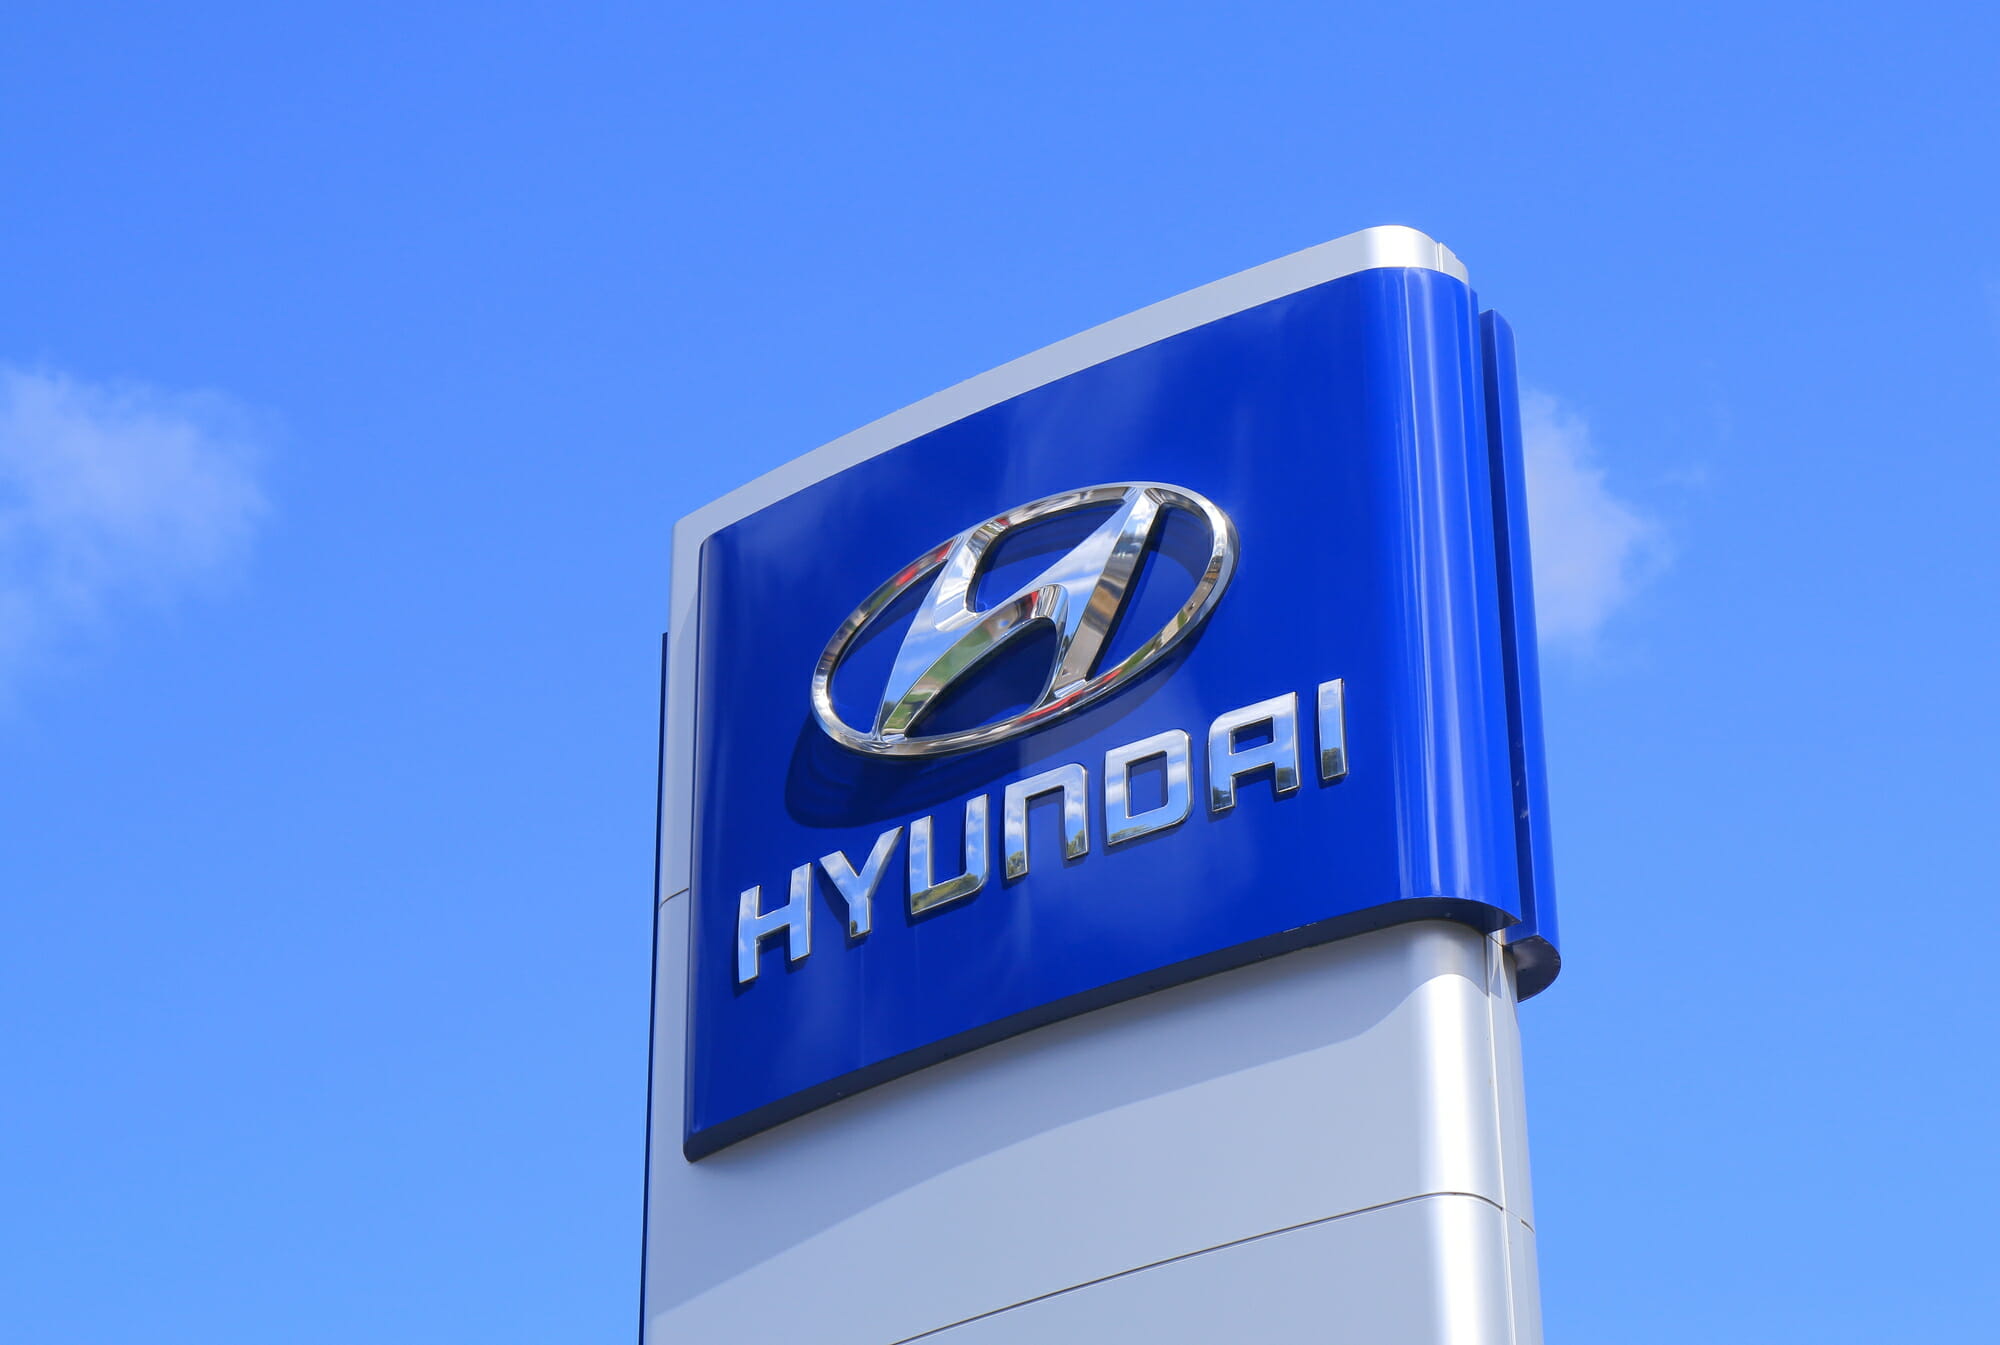 2015 Hyundai Sonata Air Filter: How to Choose the Best One